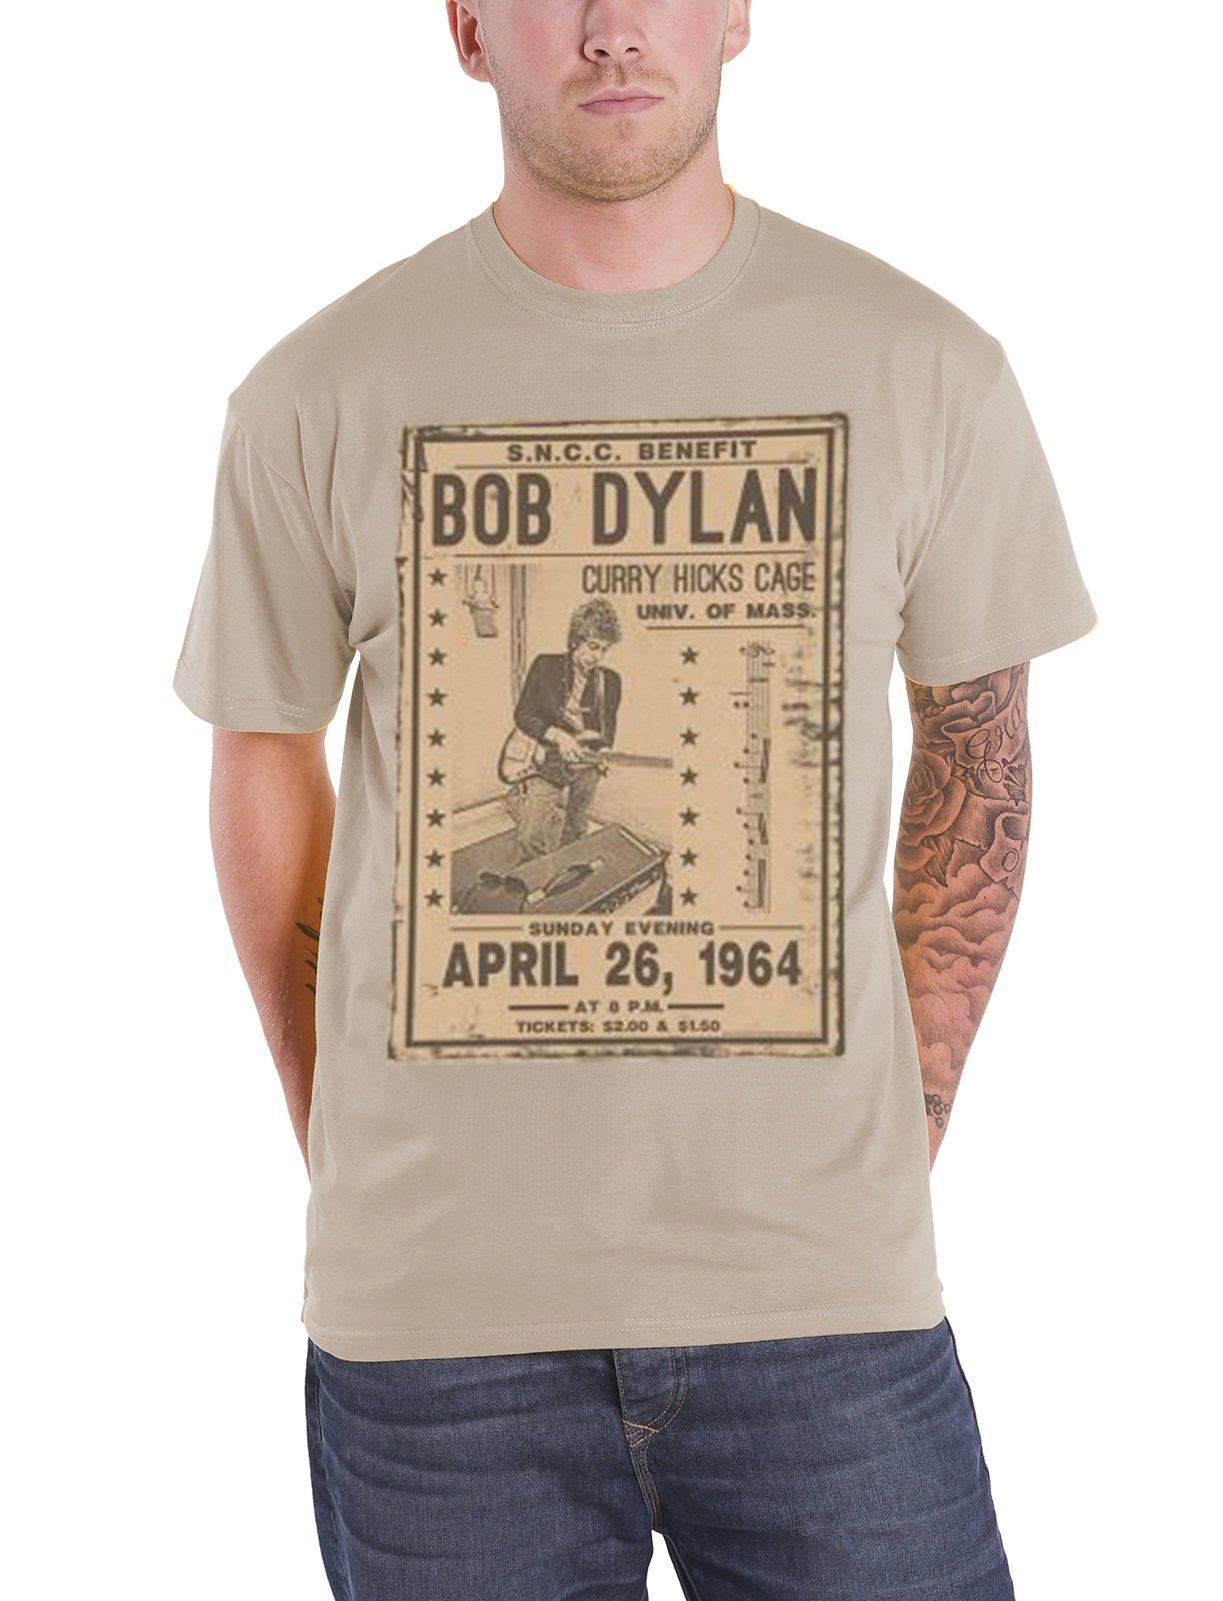 Футболка с флаером Карри Хикс Кейджа, апрель 1964 года Bob Dylan, коричневый bob dylan greatest hits song tab edition язык английский